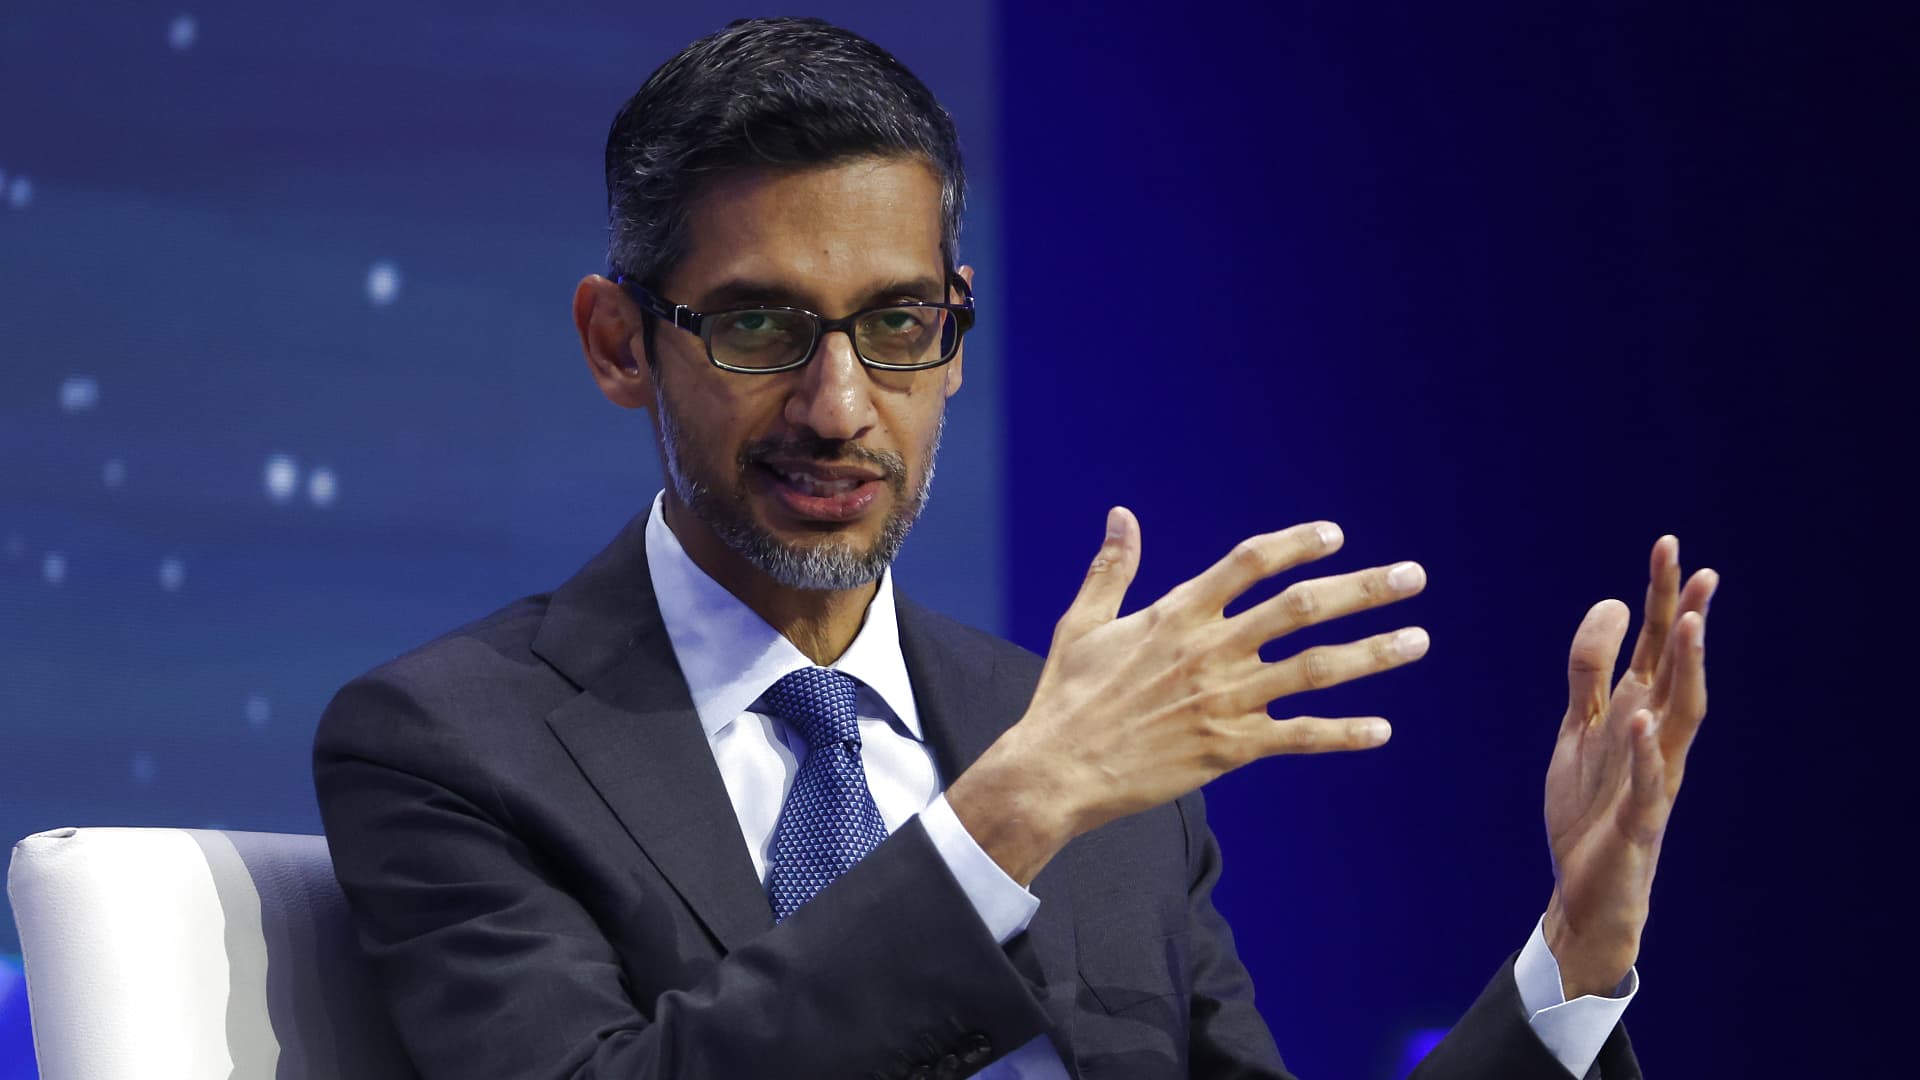 Google CEO Sundar Pichai compares AI to climate change at APEC CEO Summit